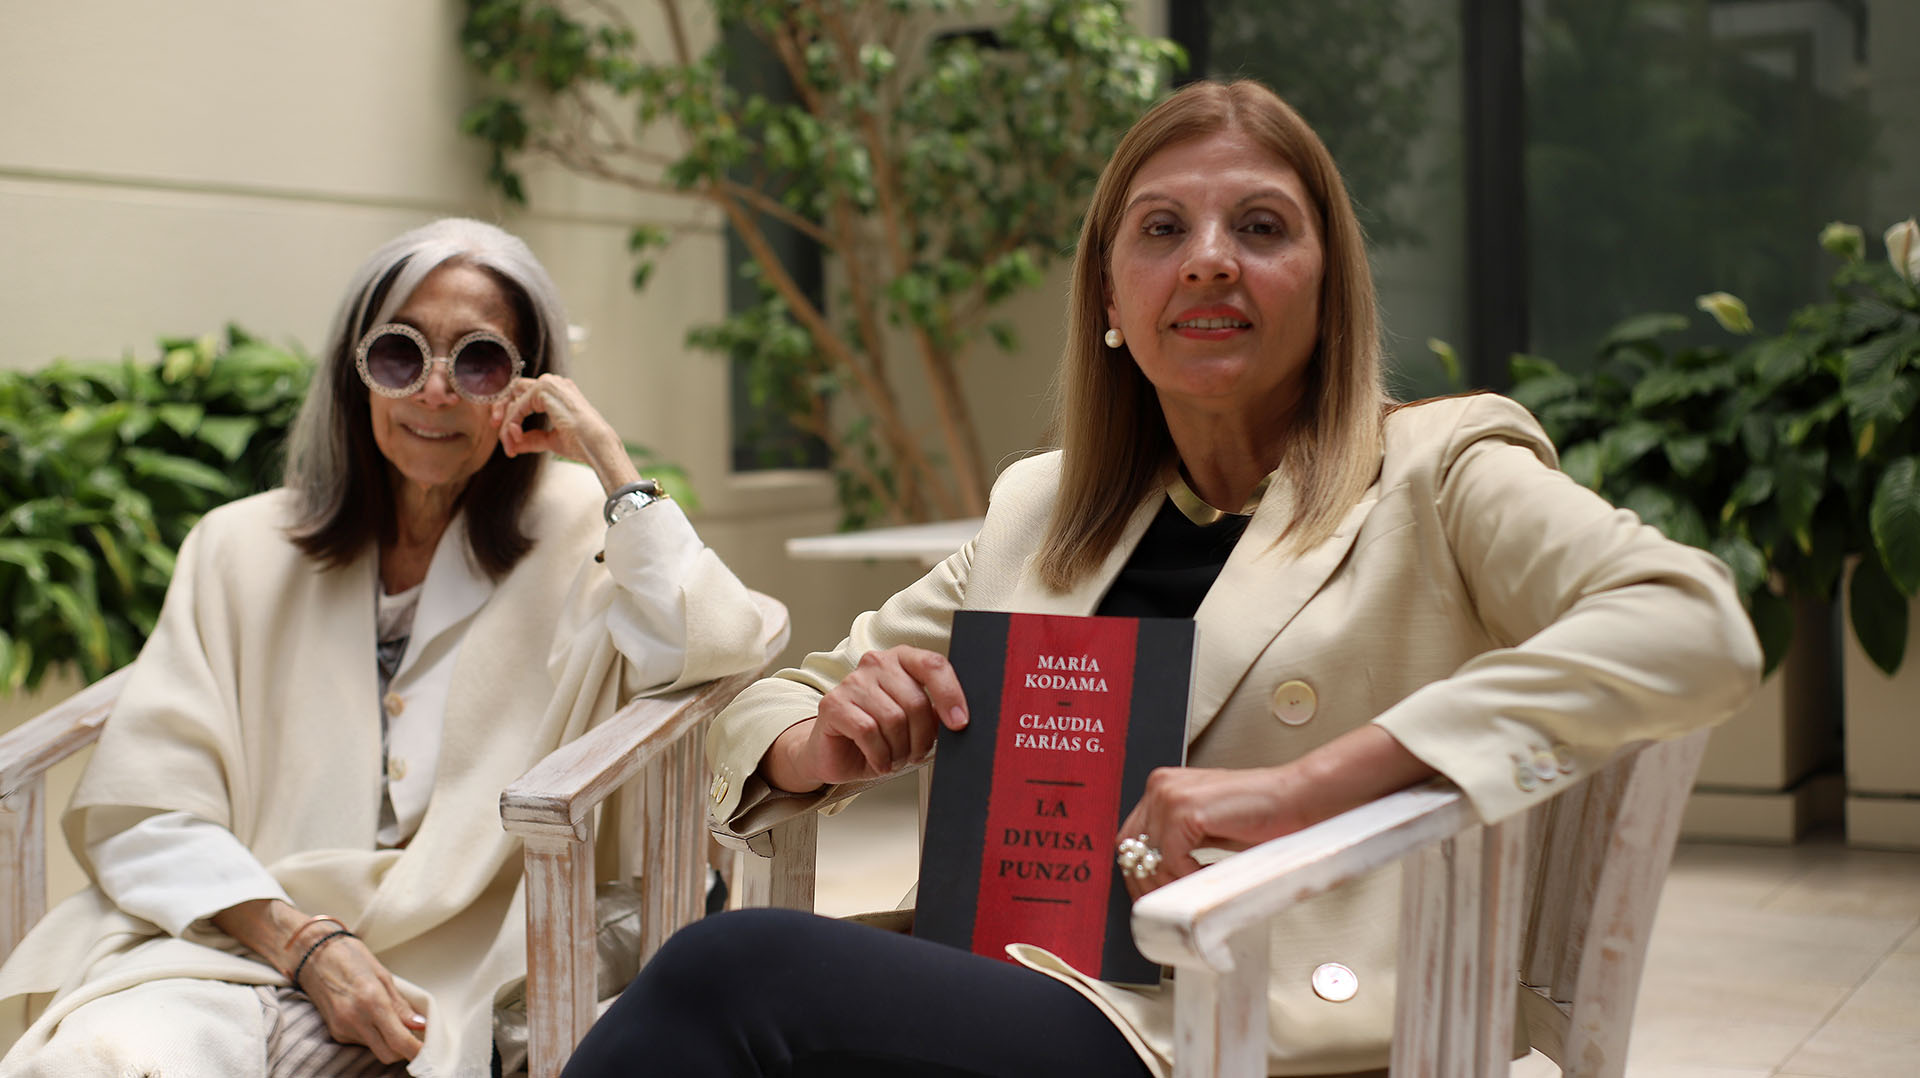 María Kodama with Claudia Farías Gómez in the presentation of their joint book.